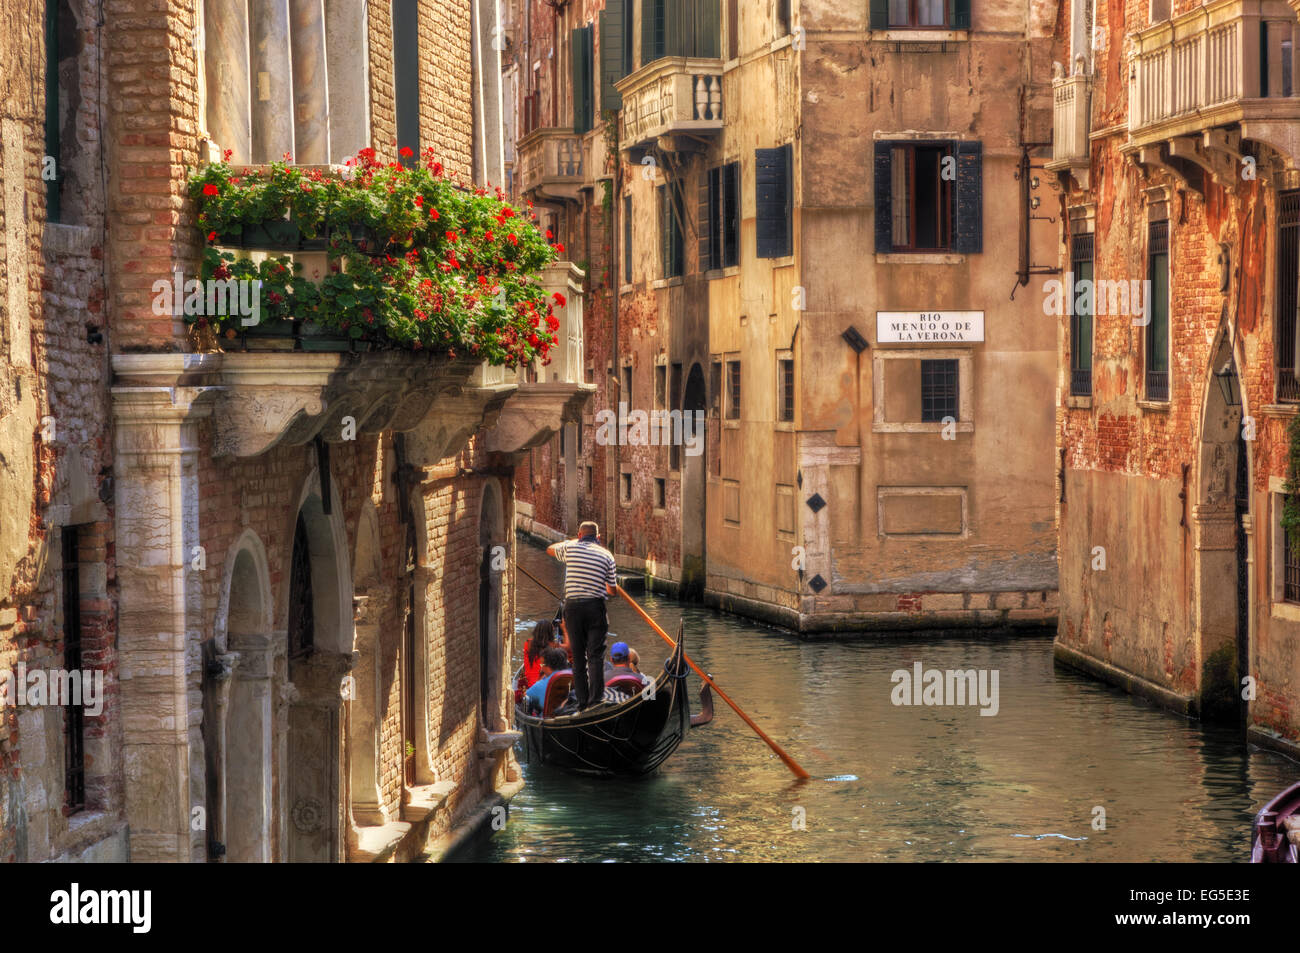 Venice, Italy. A romantic gondola floats on a narrow canal among old Venetian architecture Stock Photo